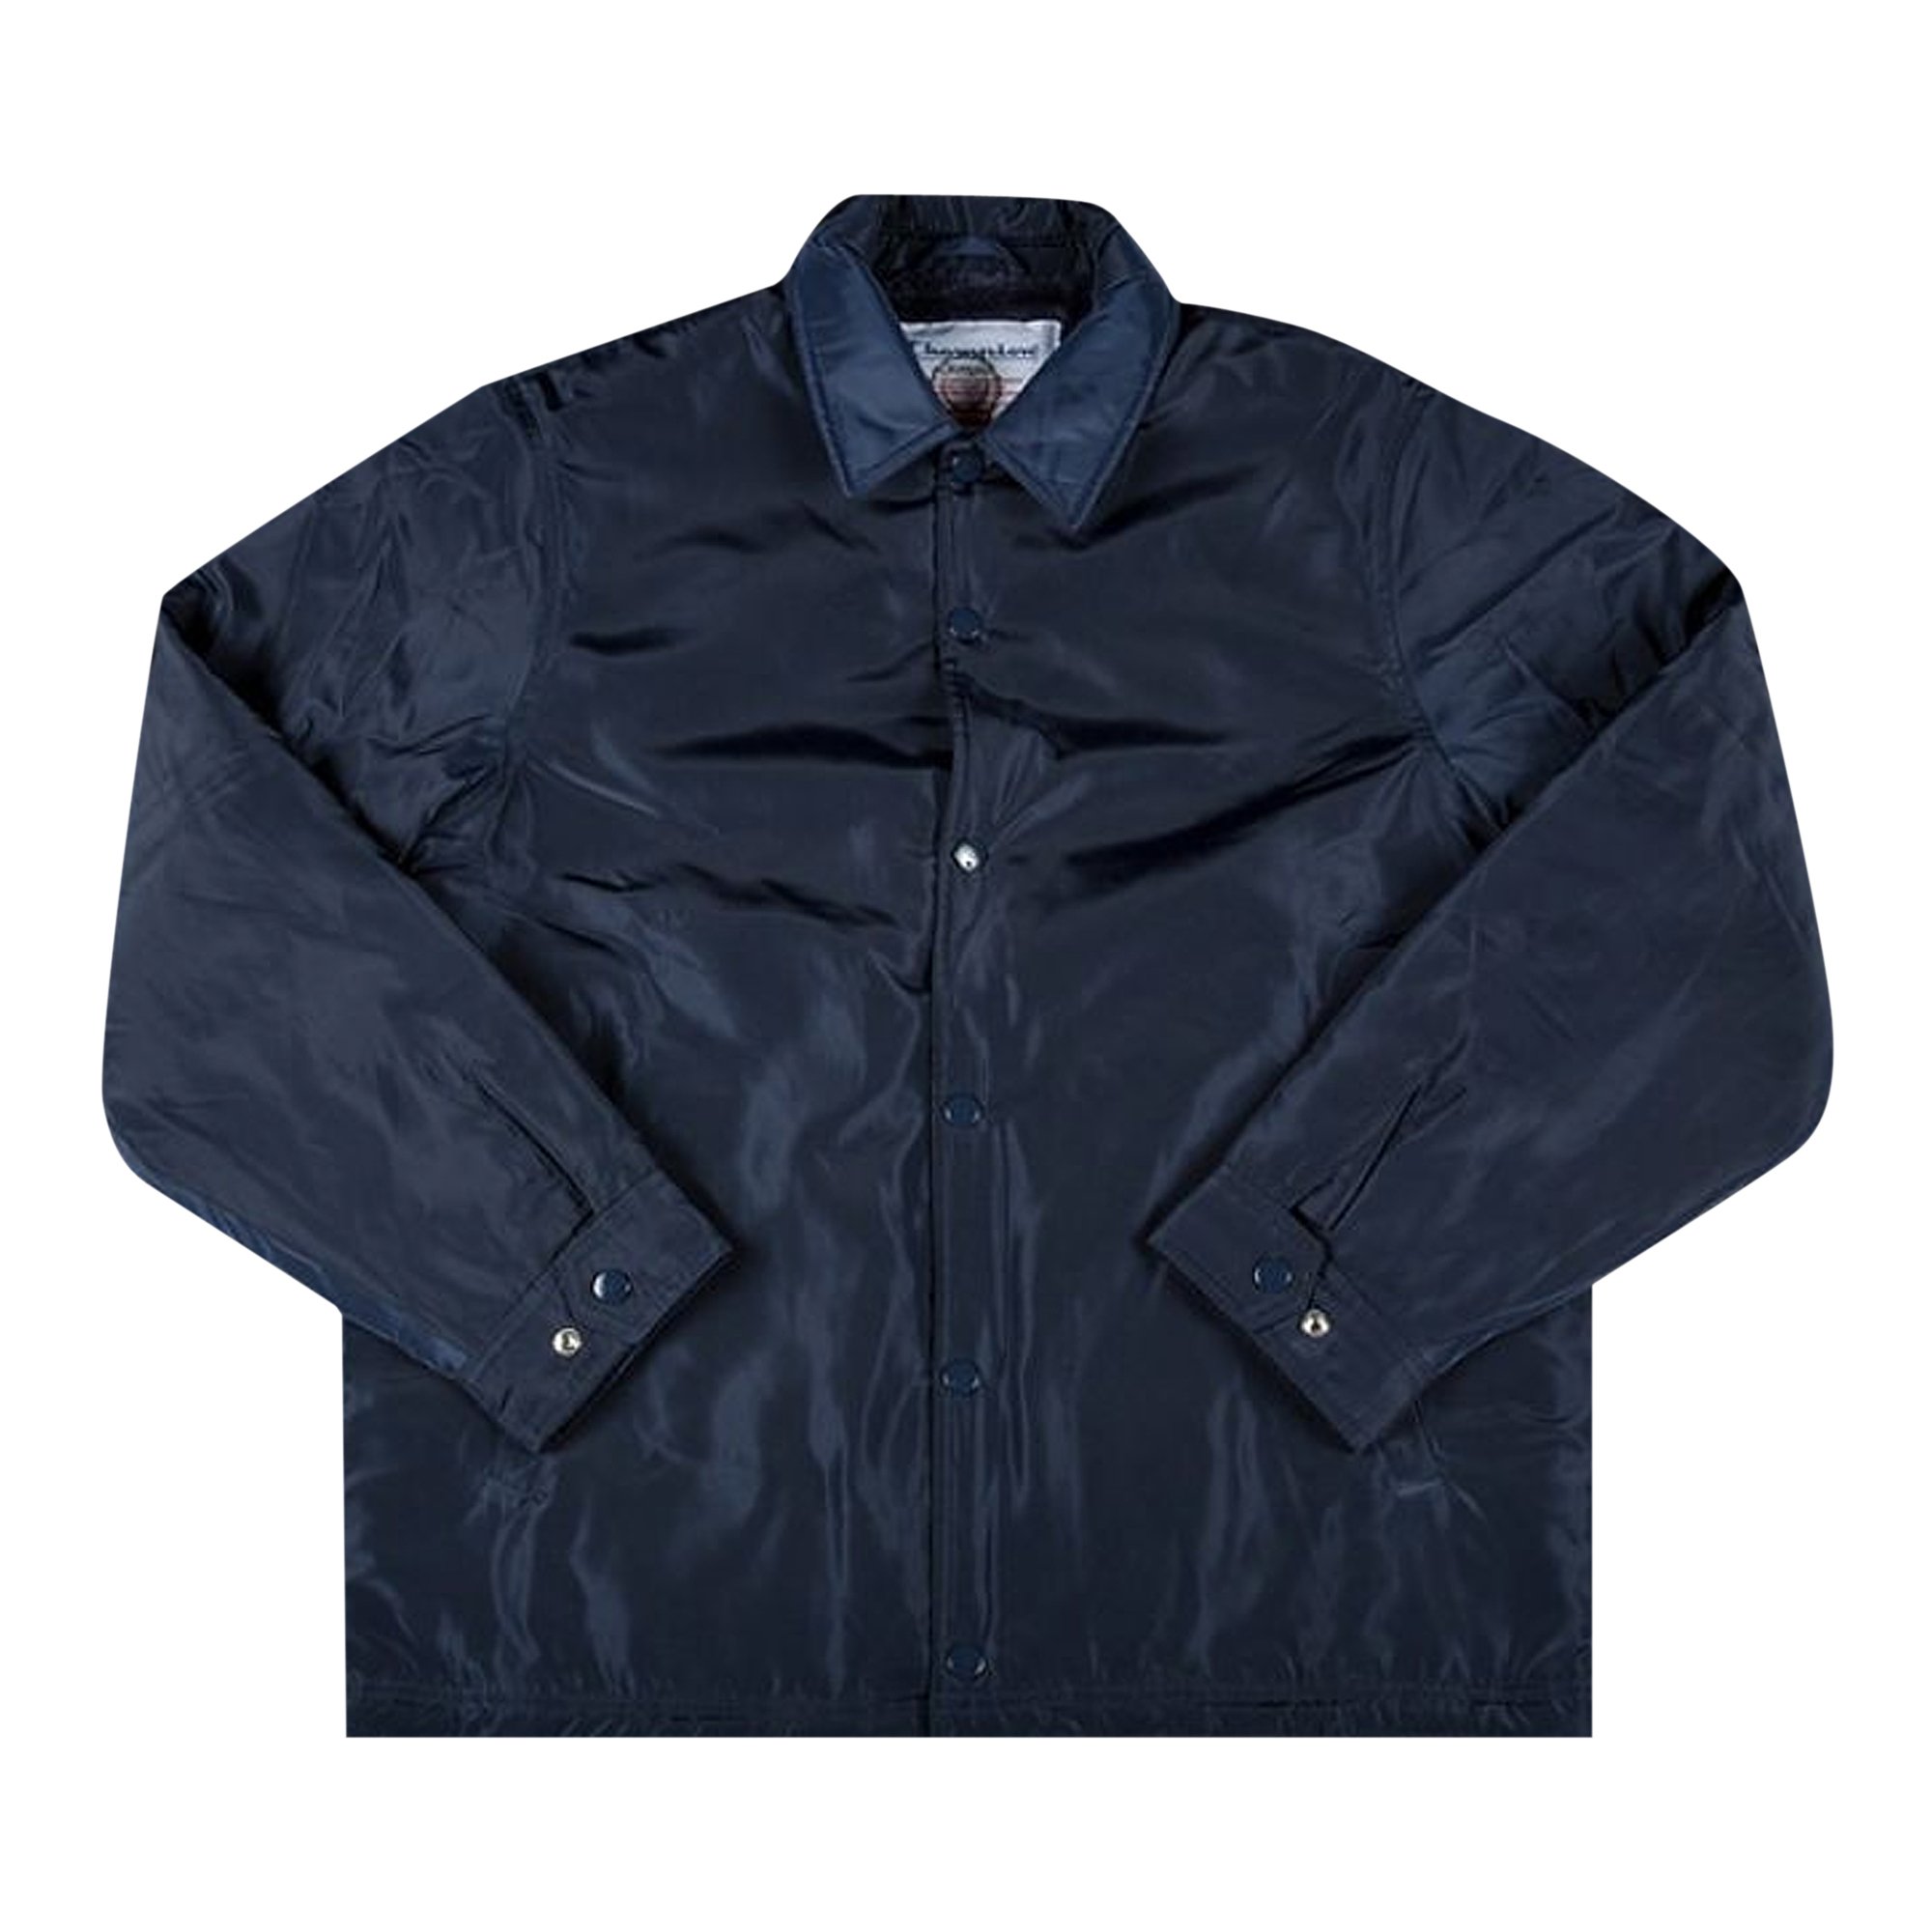 Buy Supreme x Champion Label Coaches Jacket 'Navy' - FW18J74 NAVY | GOAT